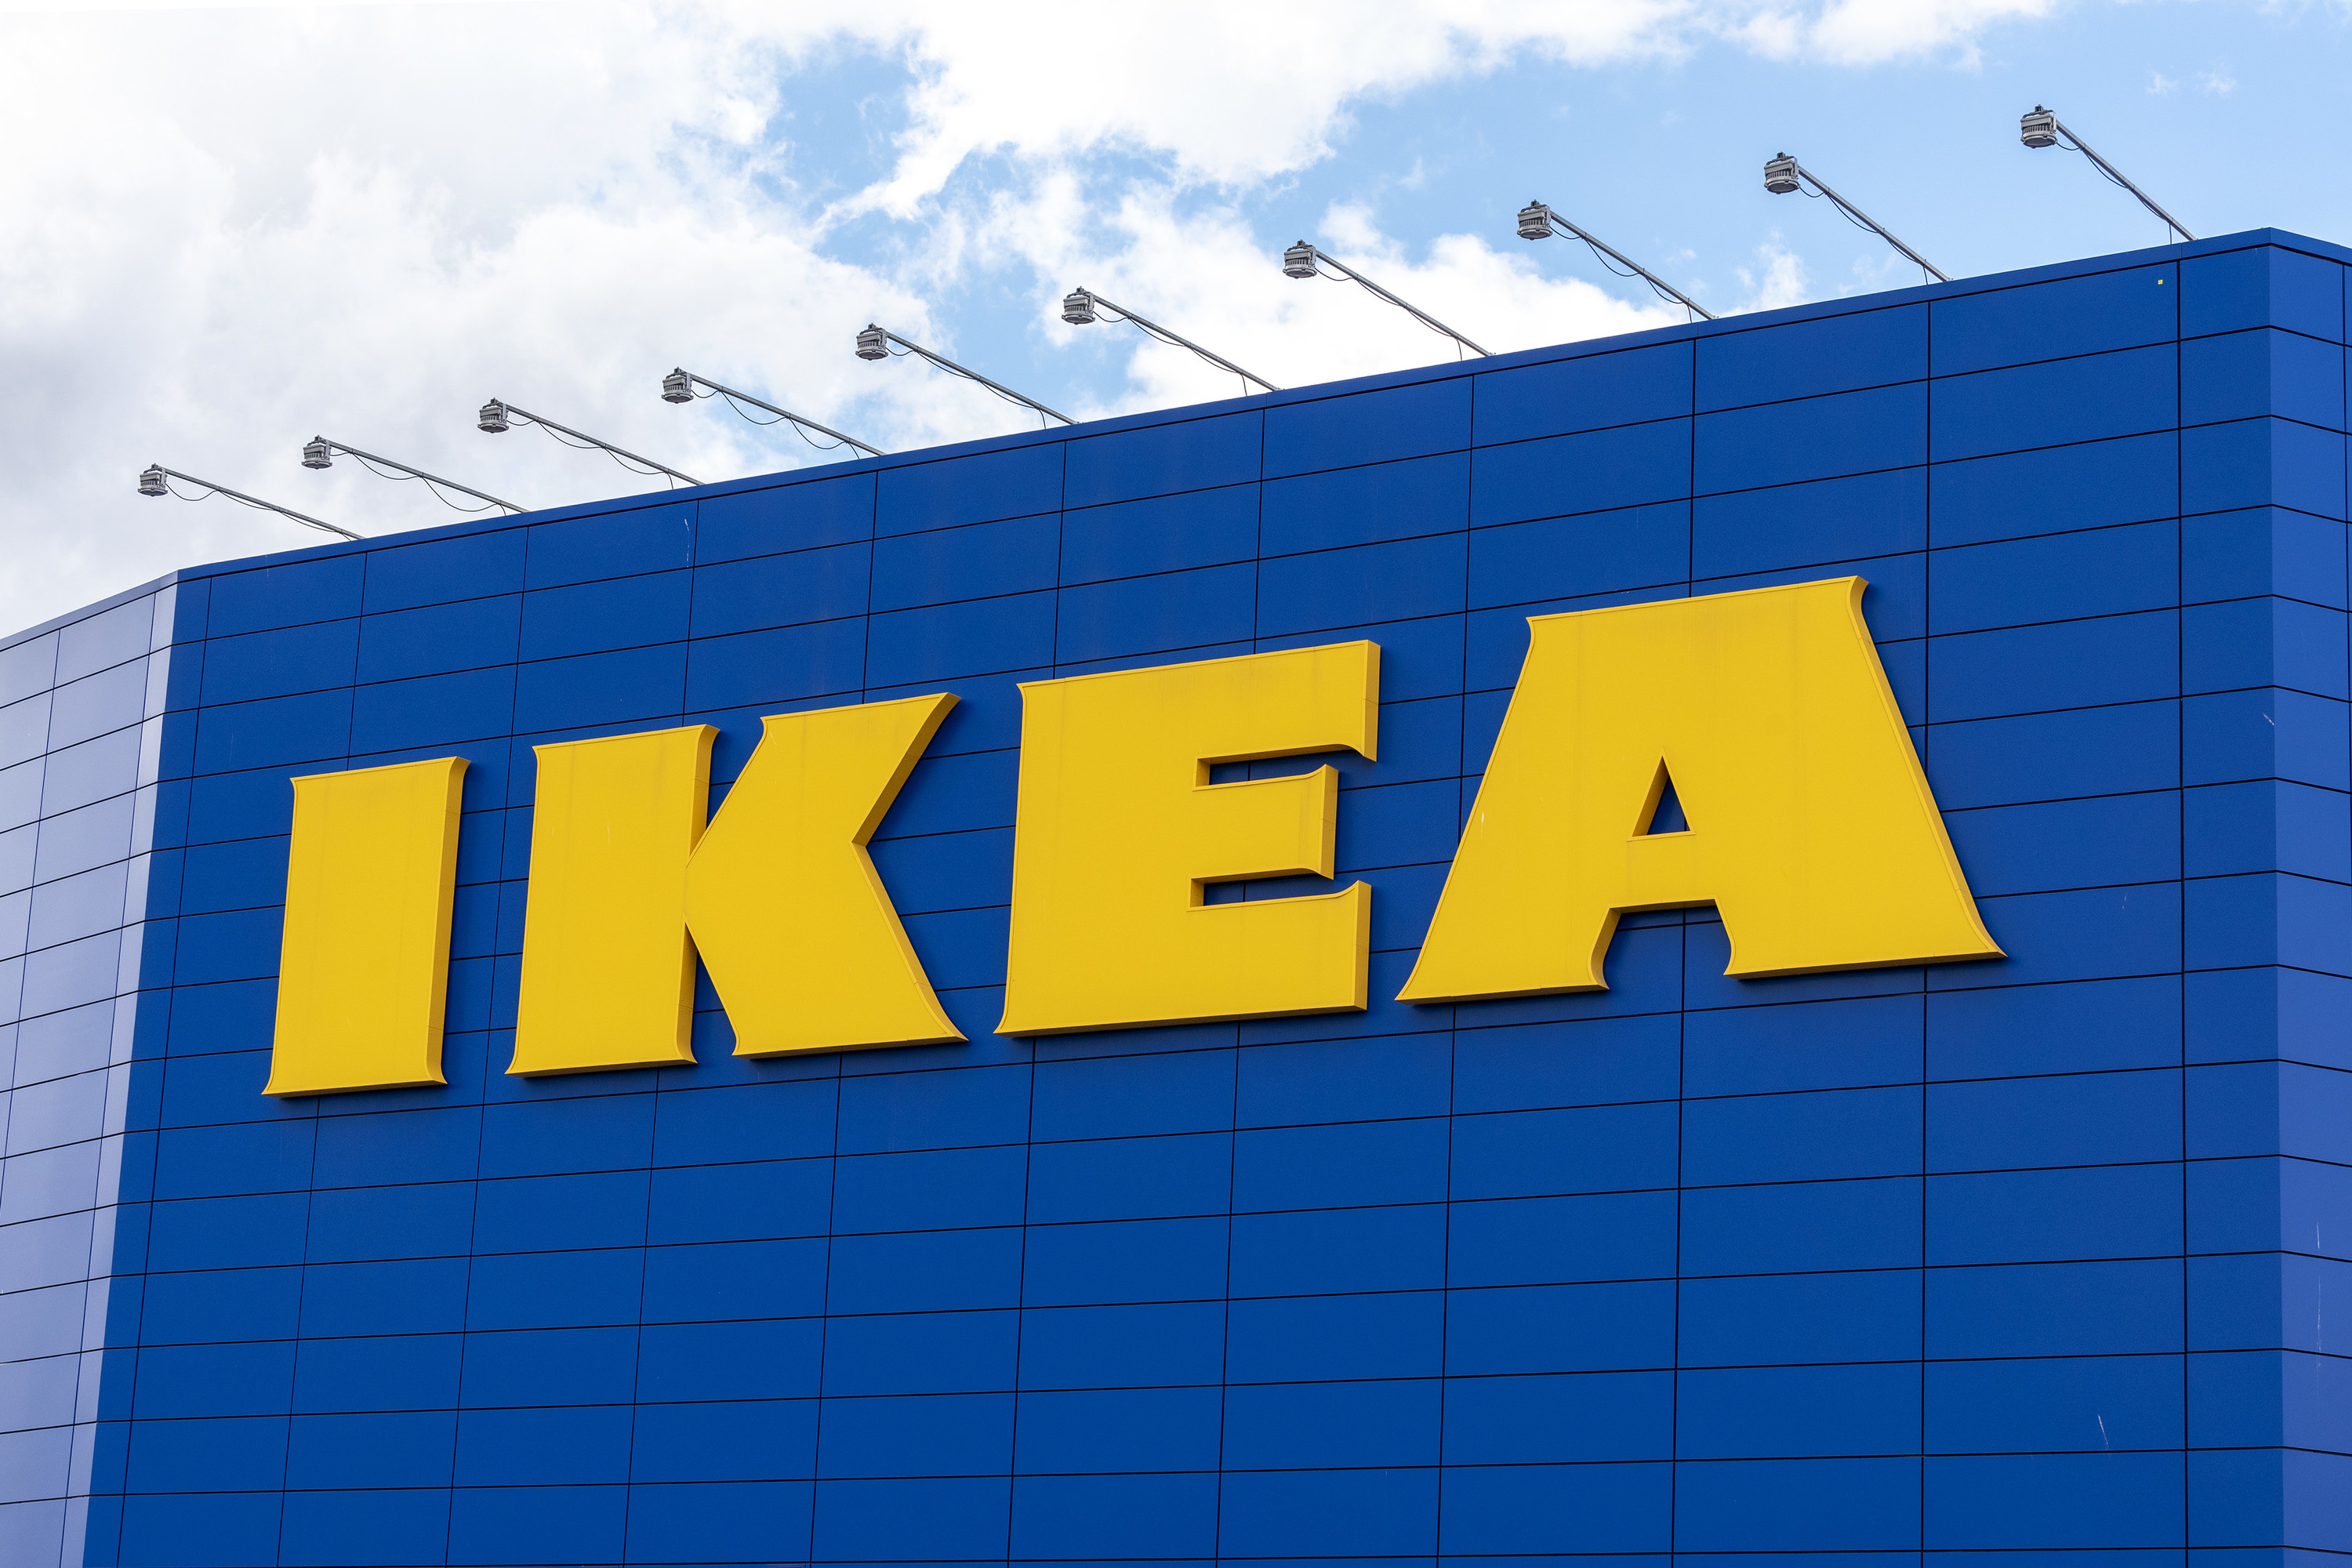 An Ikea storefront